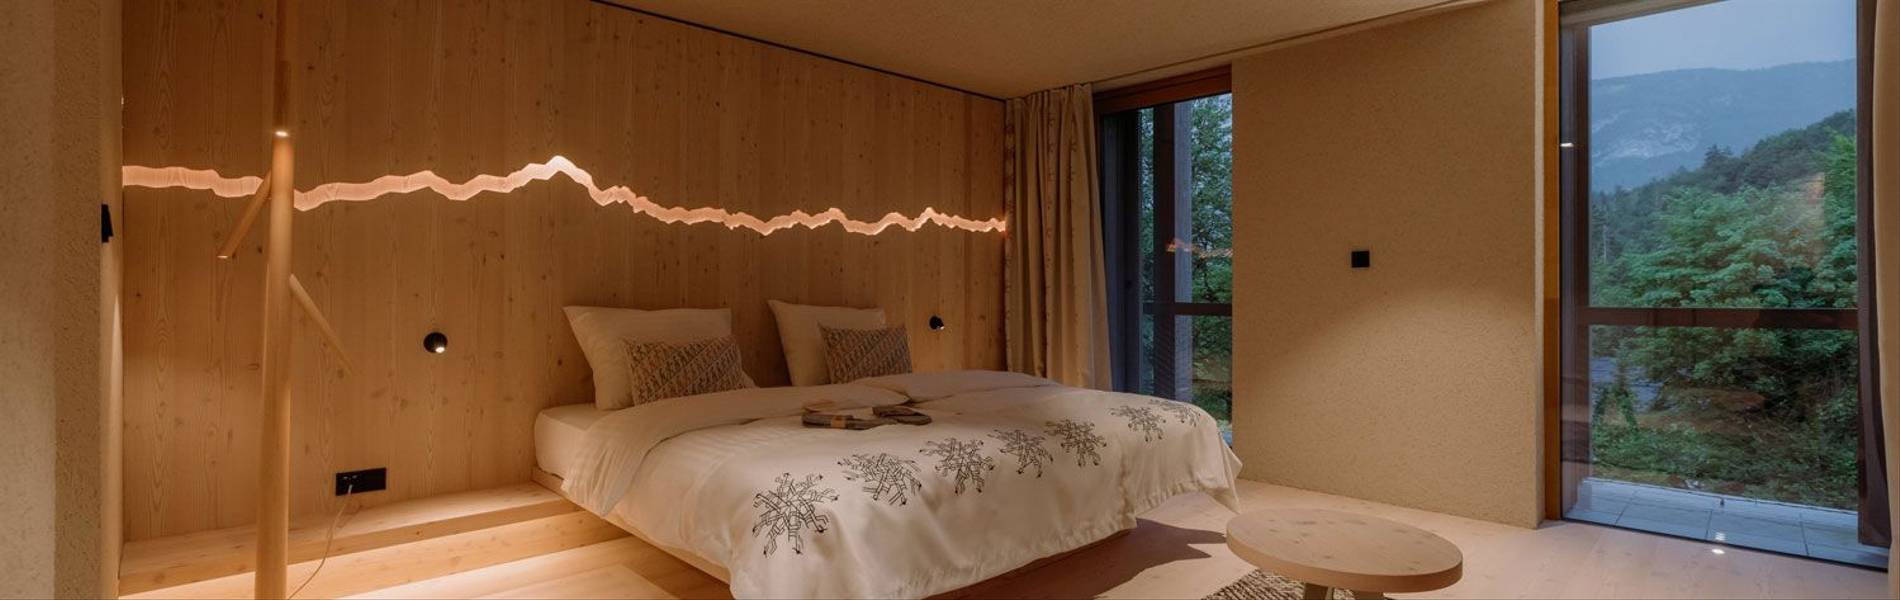 Hotel-Bohinj_double-comfort-room-Foto-Ziga-Intihar-2.jpg